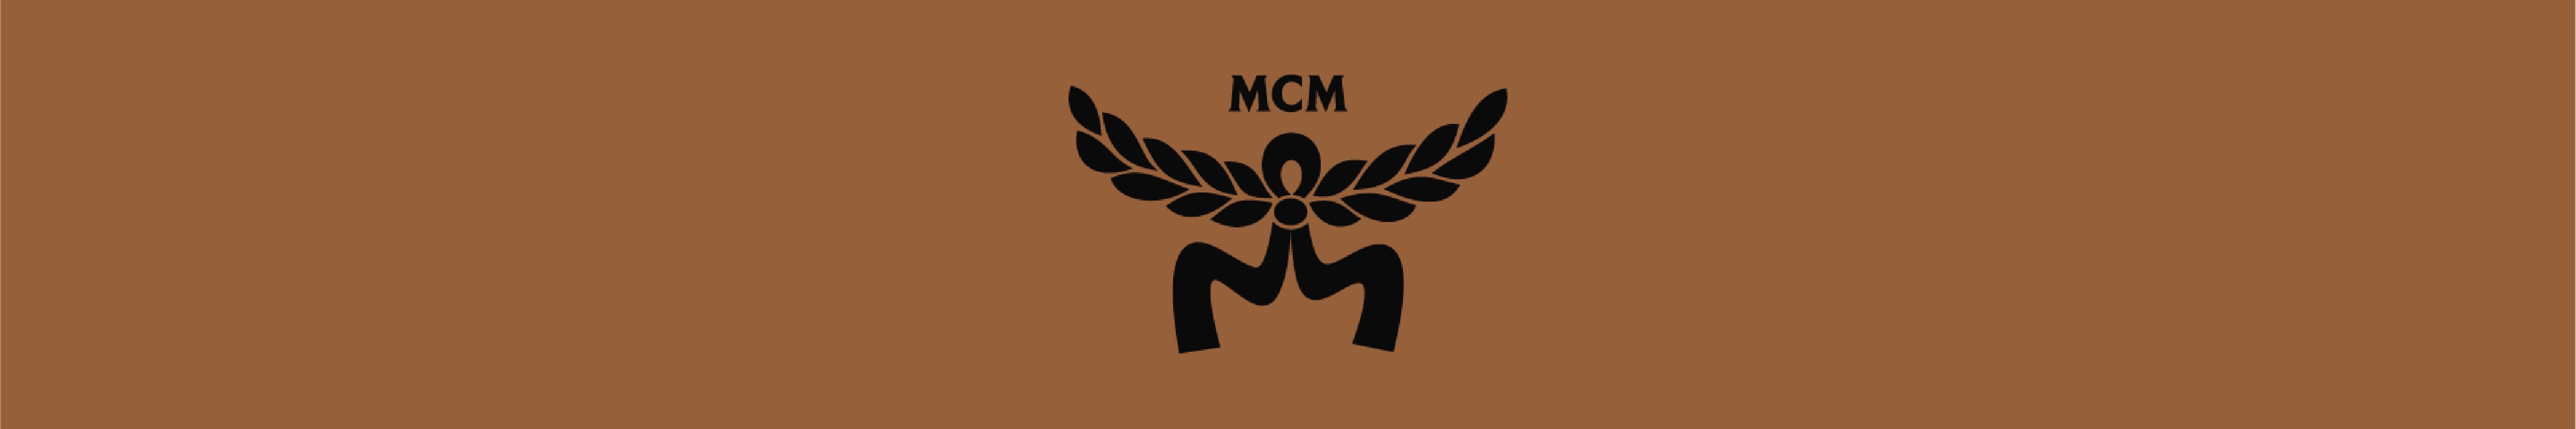 mcm-banner